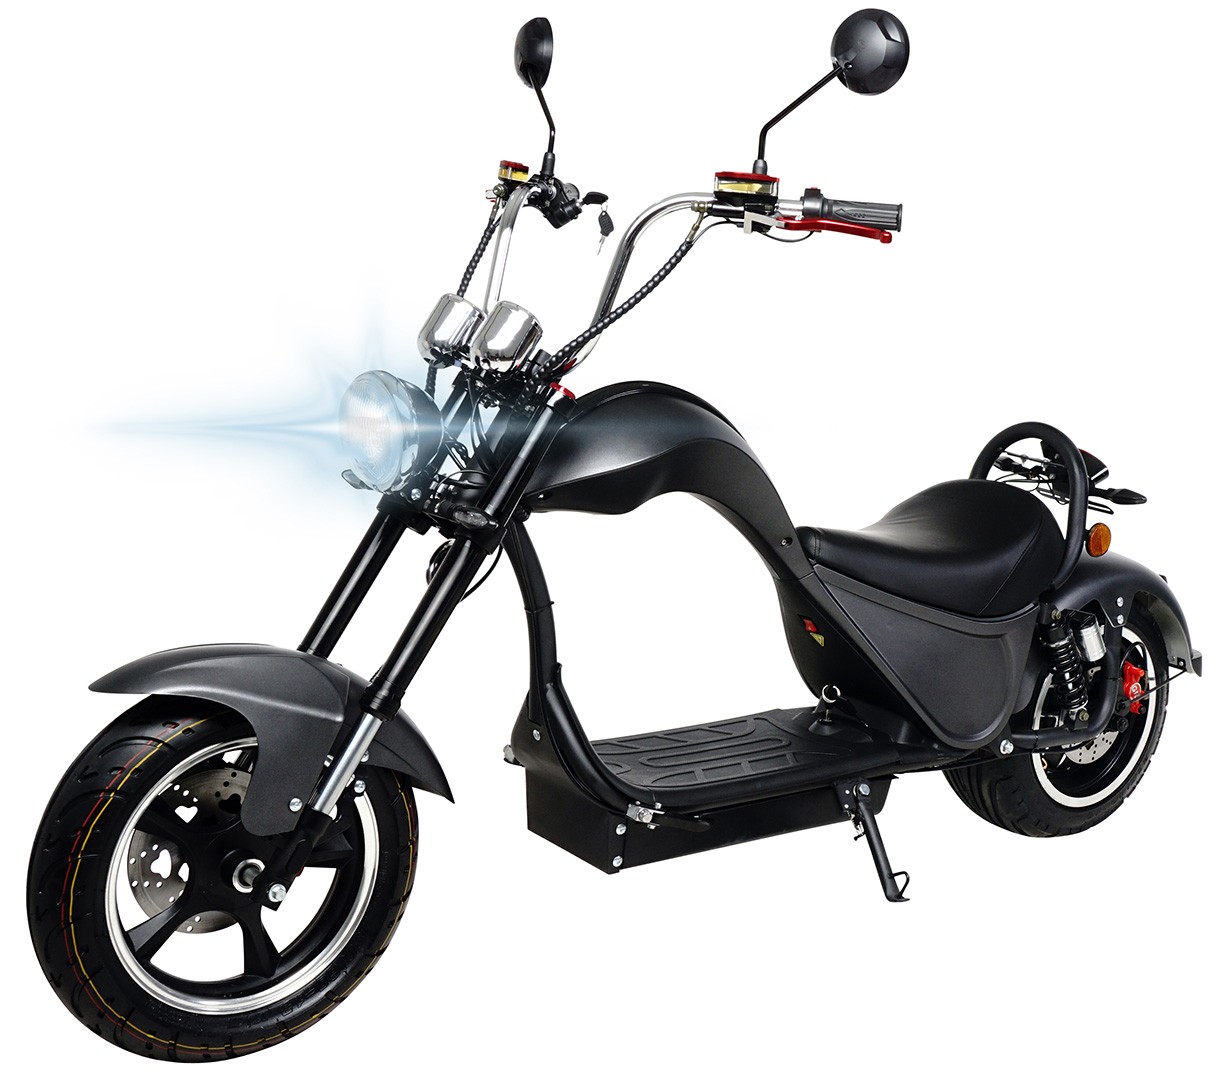 Actionbikes E-Scooter-Chopper-One Schwarz 5052303032333238362D3031 DSC00227 OL 1620x1080